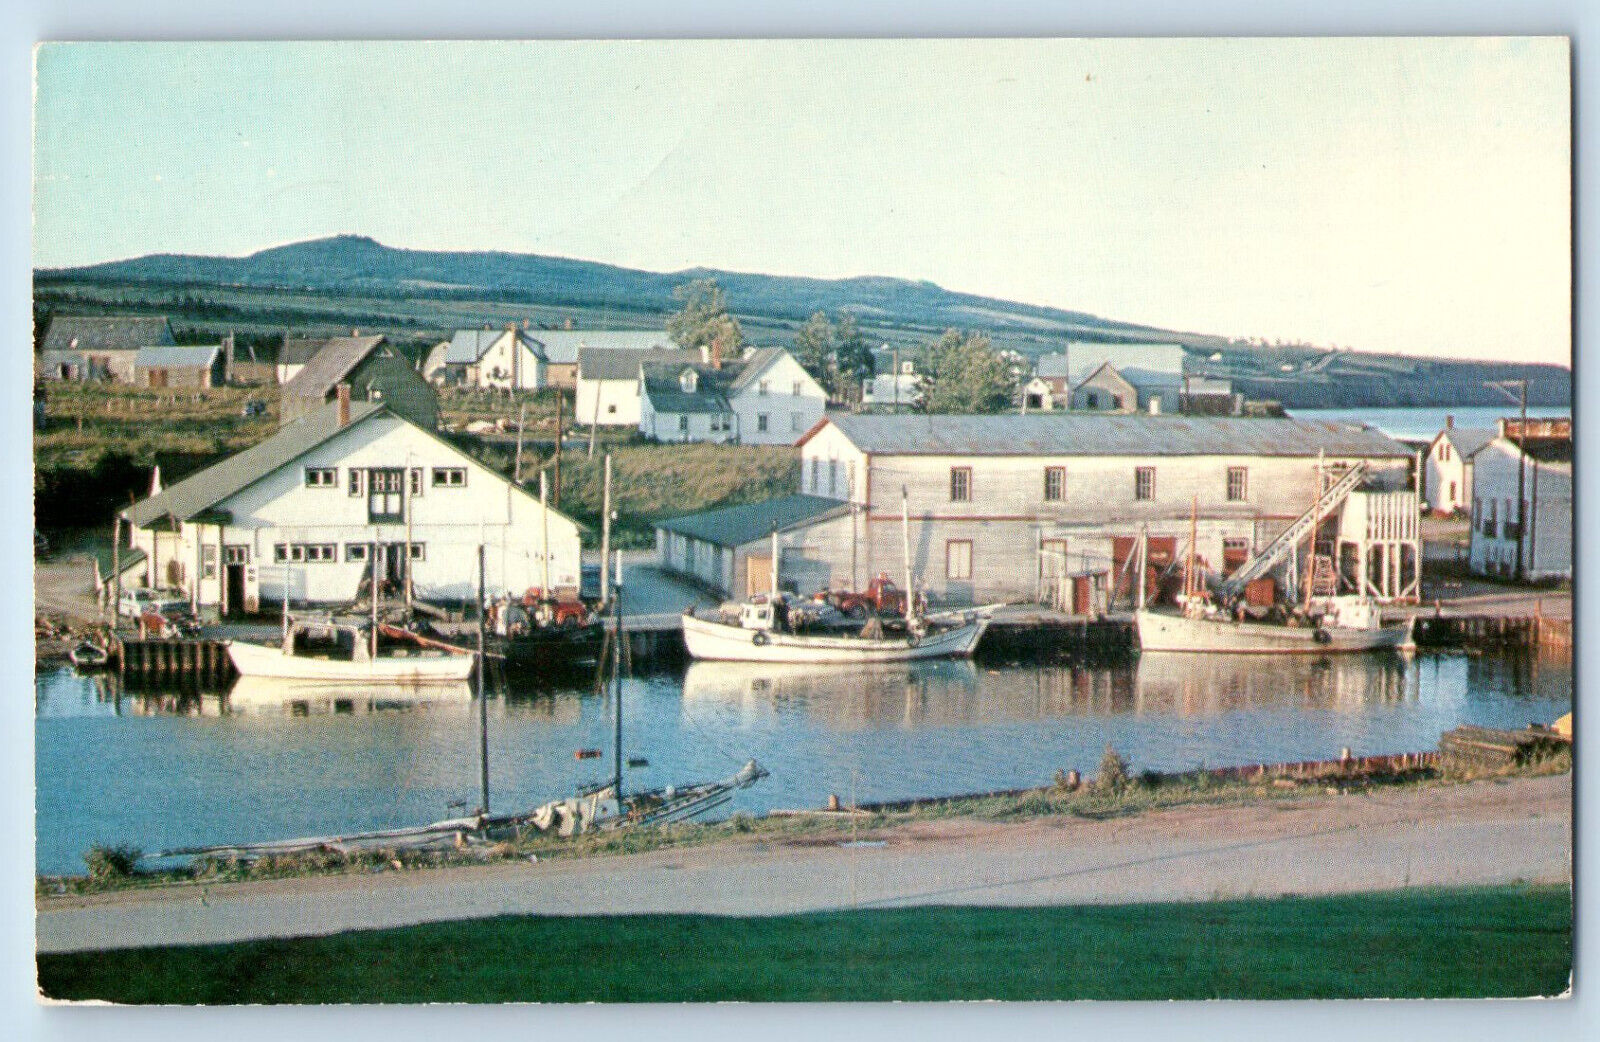 La Gaspesie Quebec Canada Postcard Fishing Boat Unloading Their Catch c1950's